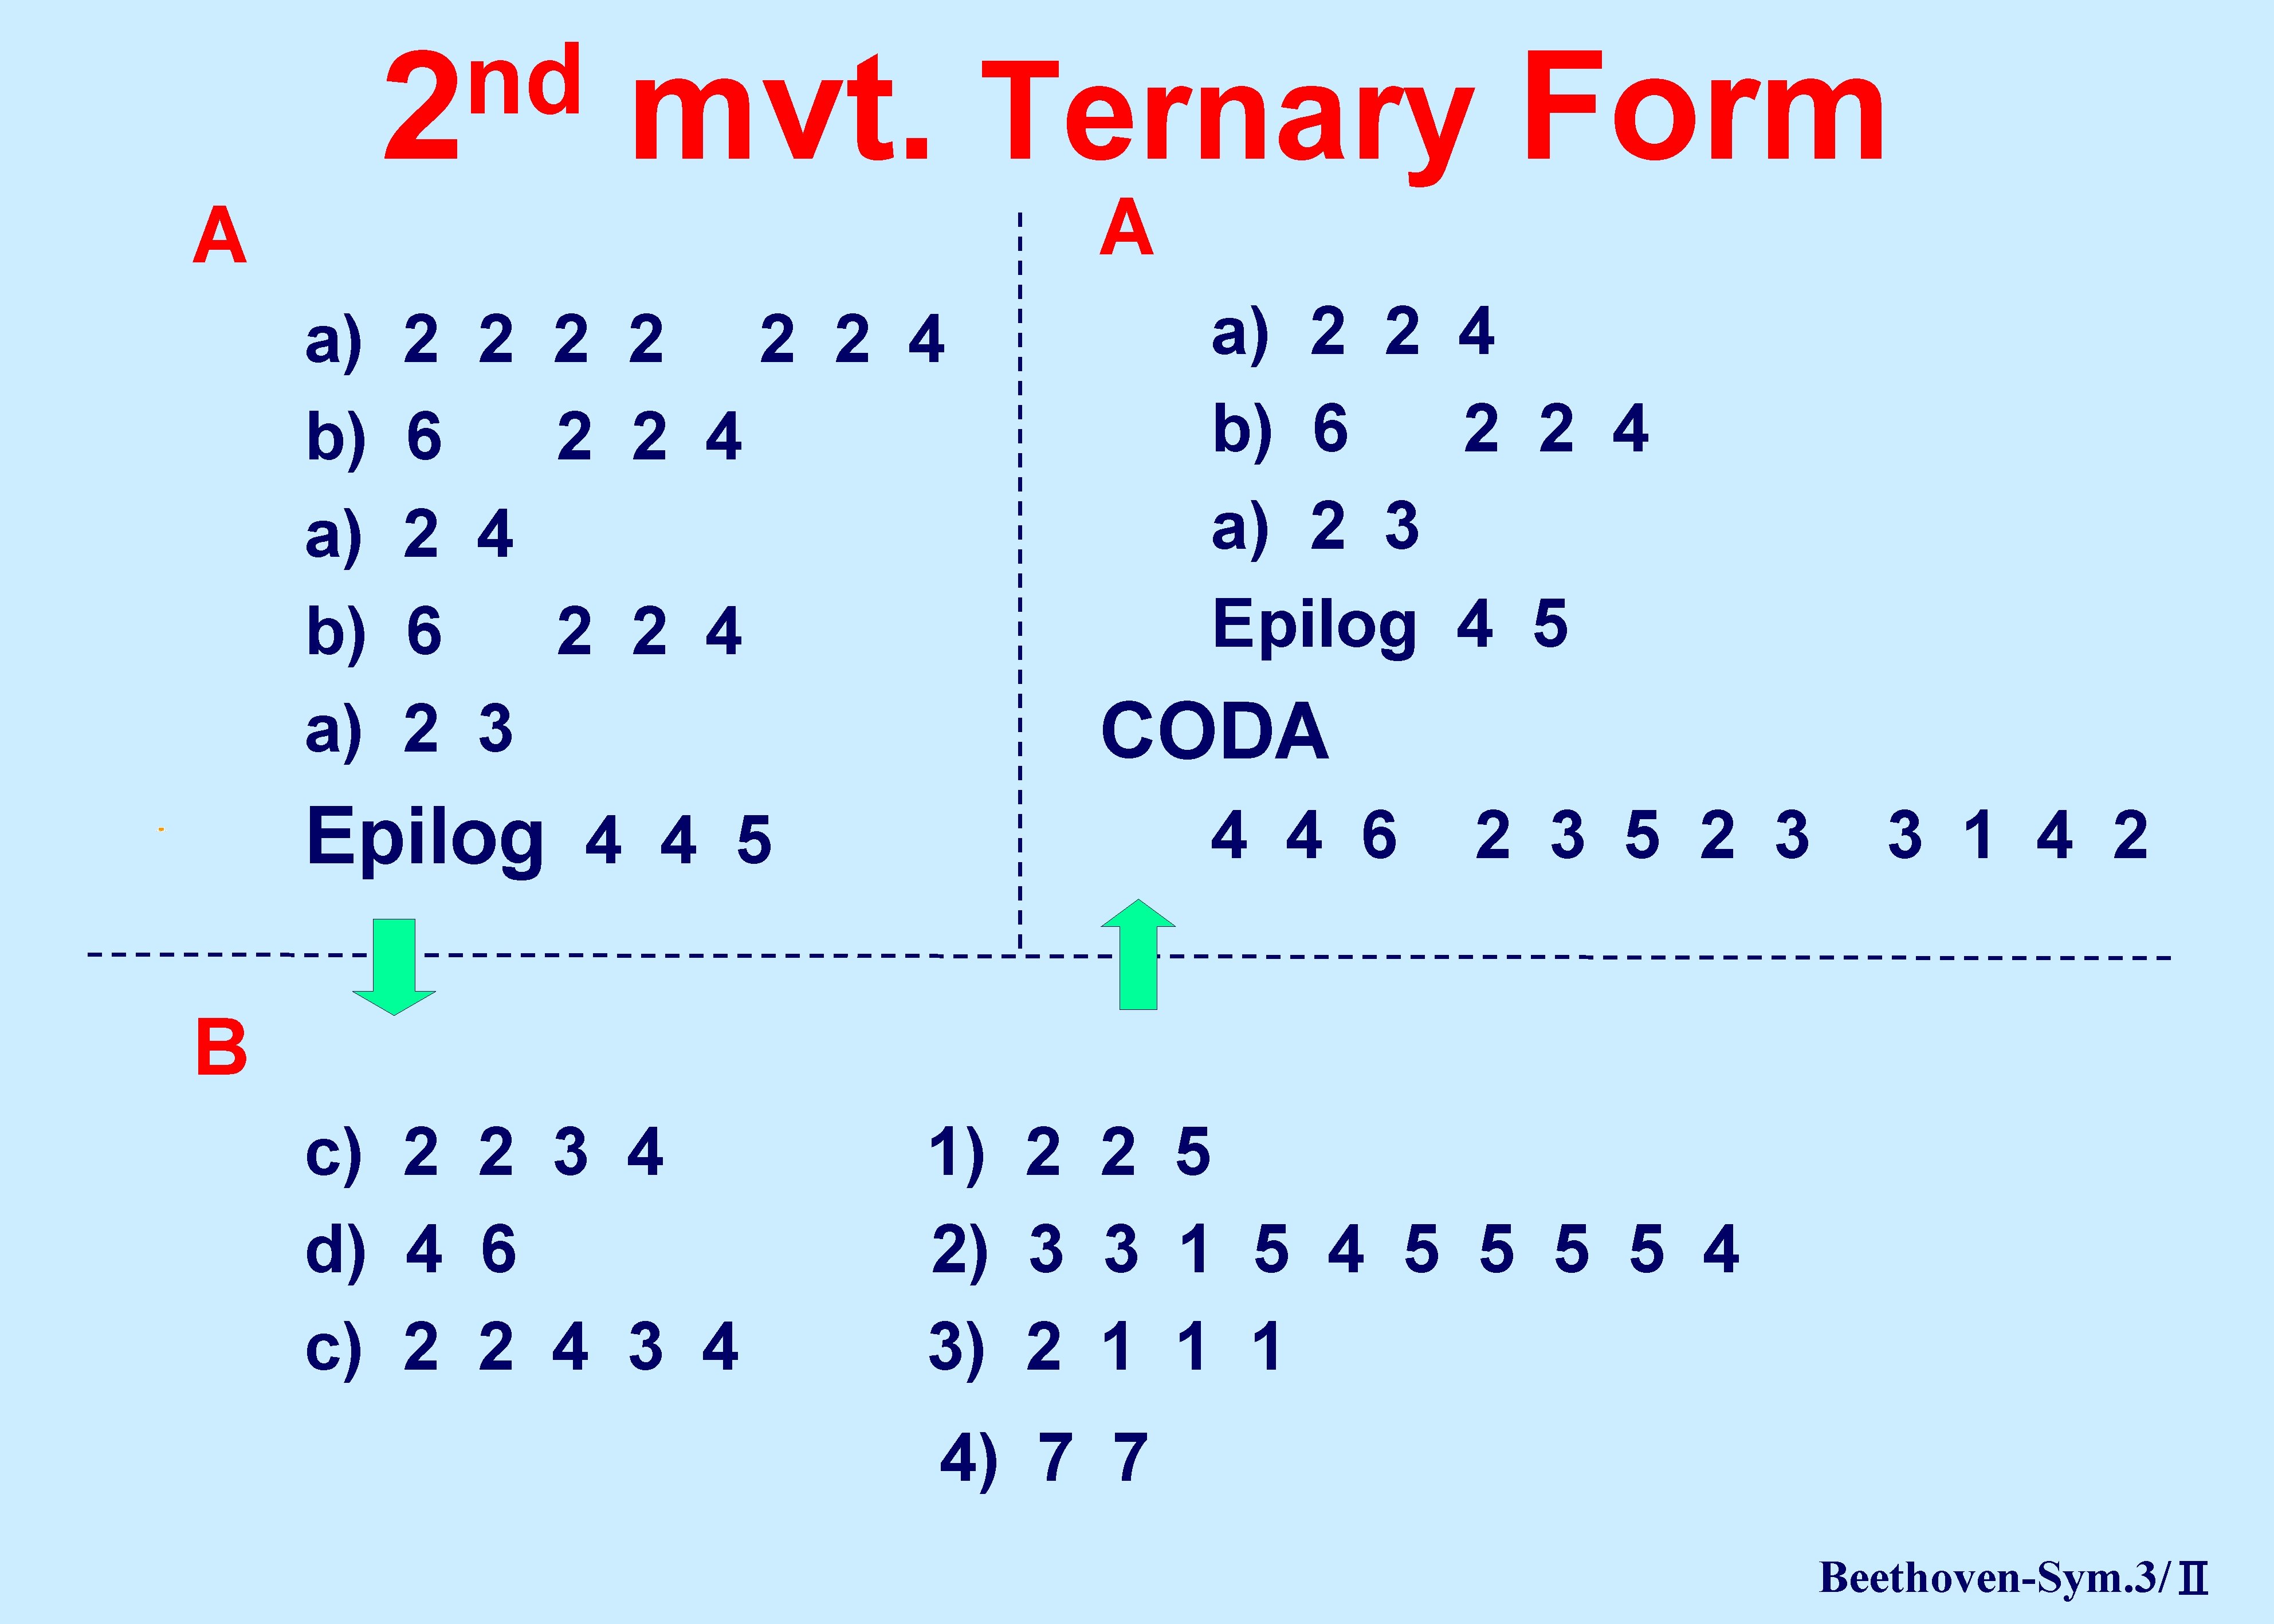 nd 2 mvt. Ternary Form A A a) b) a) 2 2 2 4